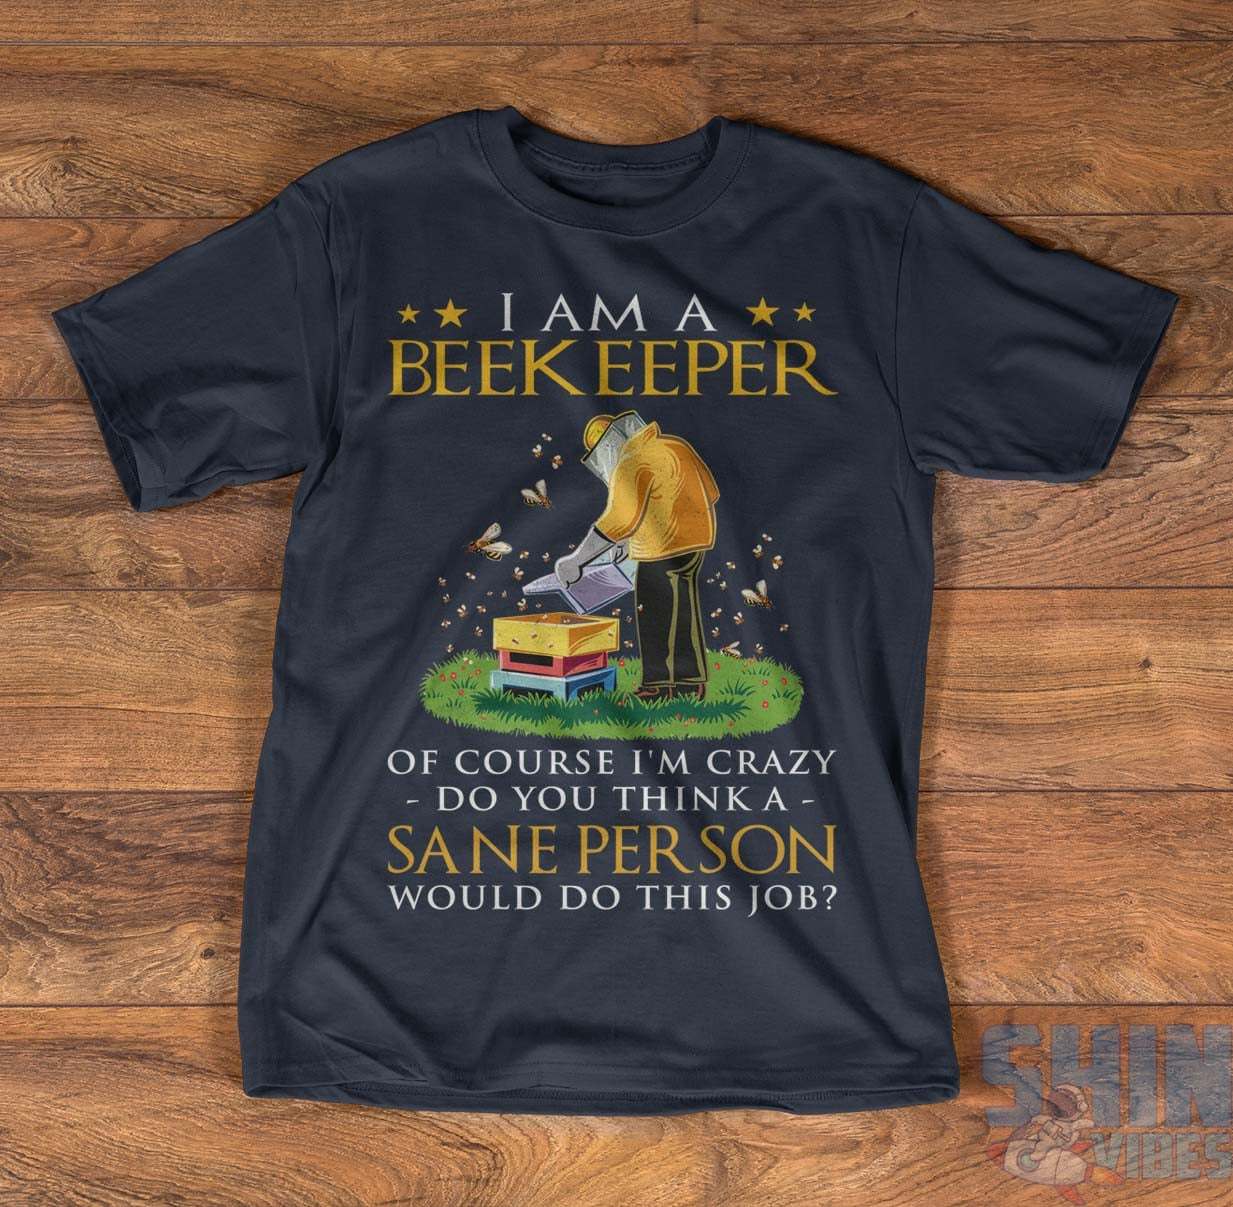 I am a bee keeper of course I'm crazy - Bee keeper job